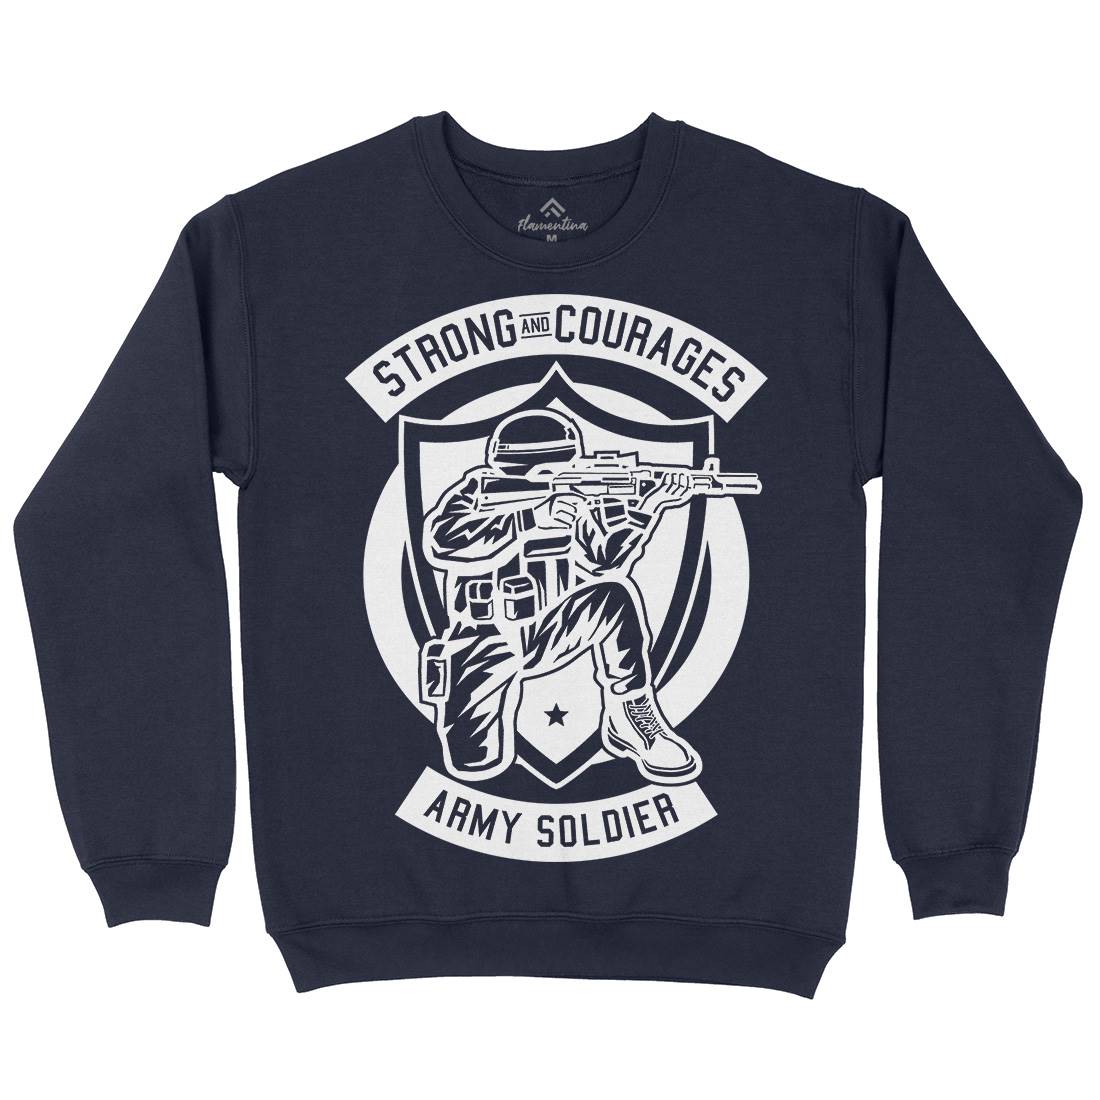 Army Soldier Kids Crew Neck Sweatshirt Army B483